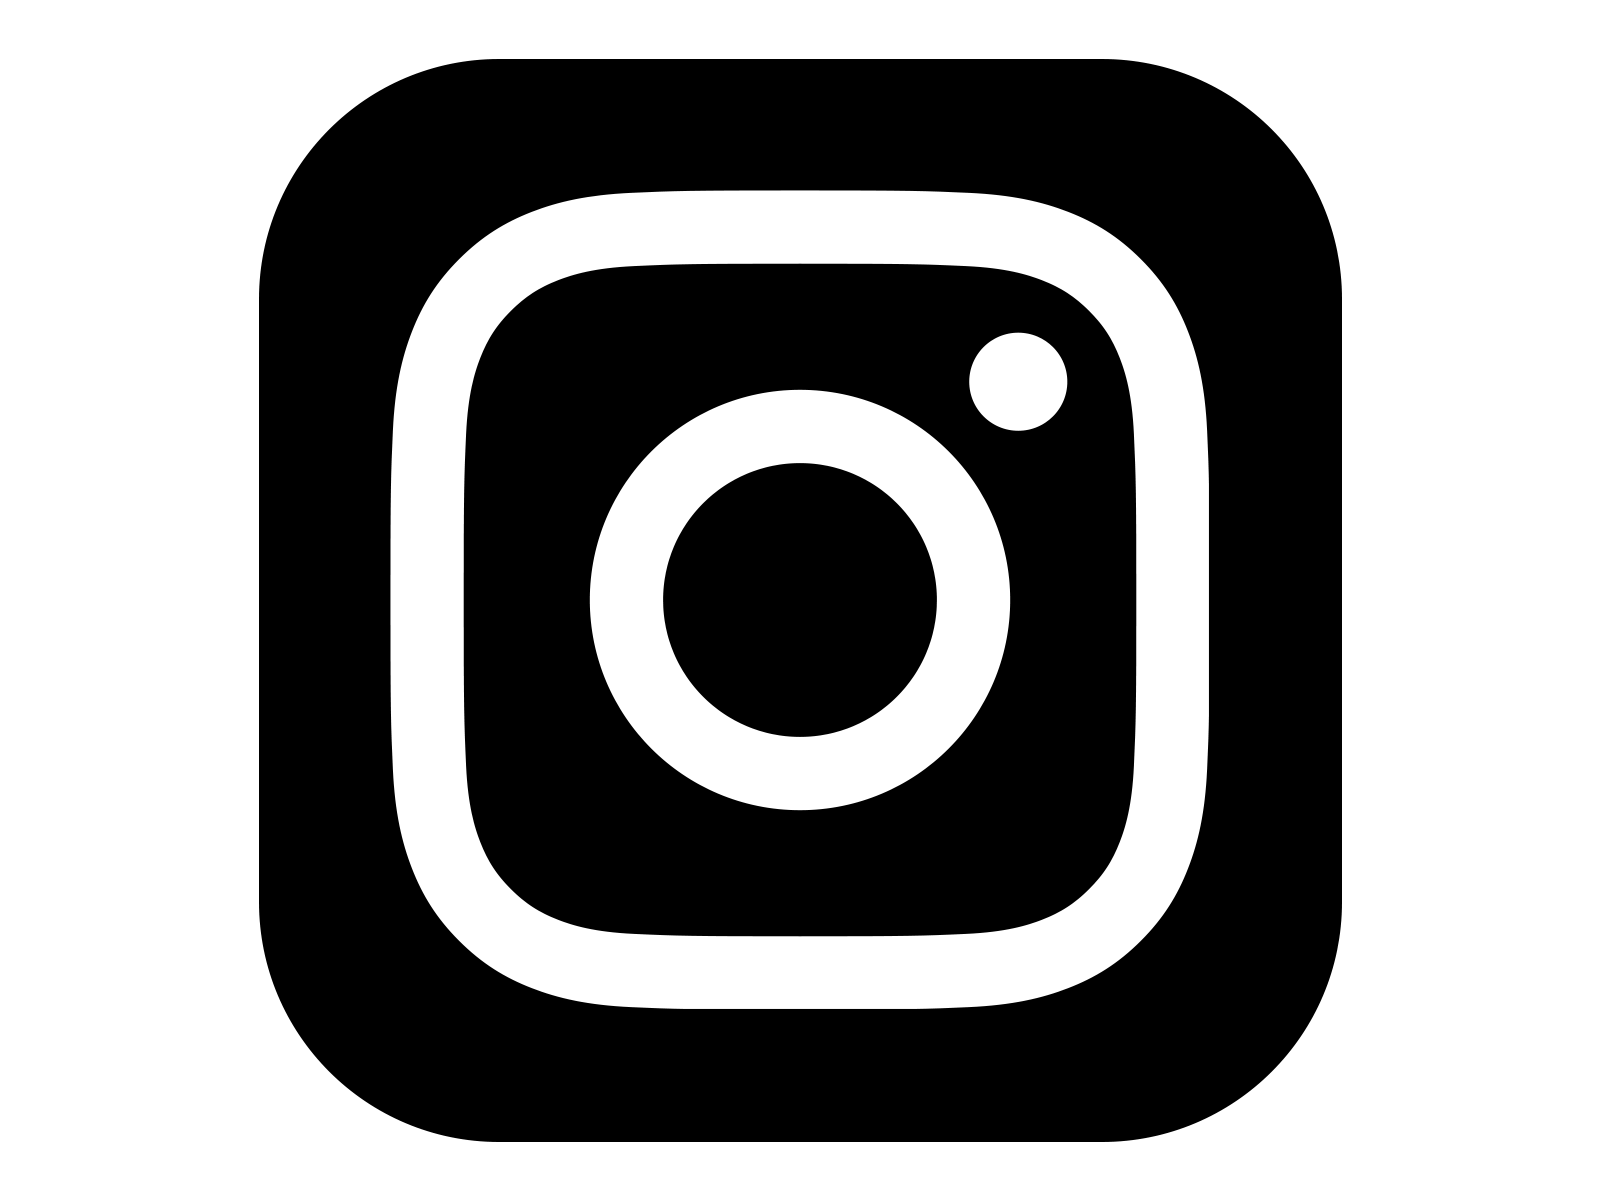 IG Logo - ig logo | abundant | Pinterest | Instagram logo, Instagram and Logos